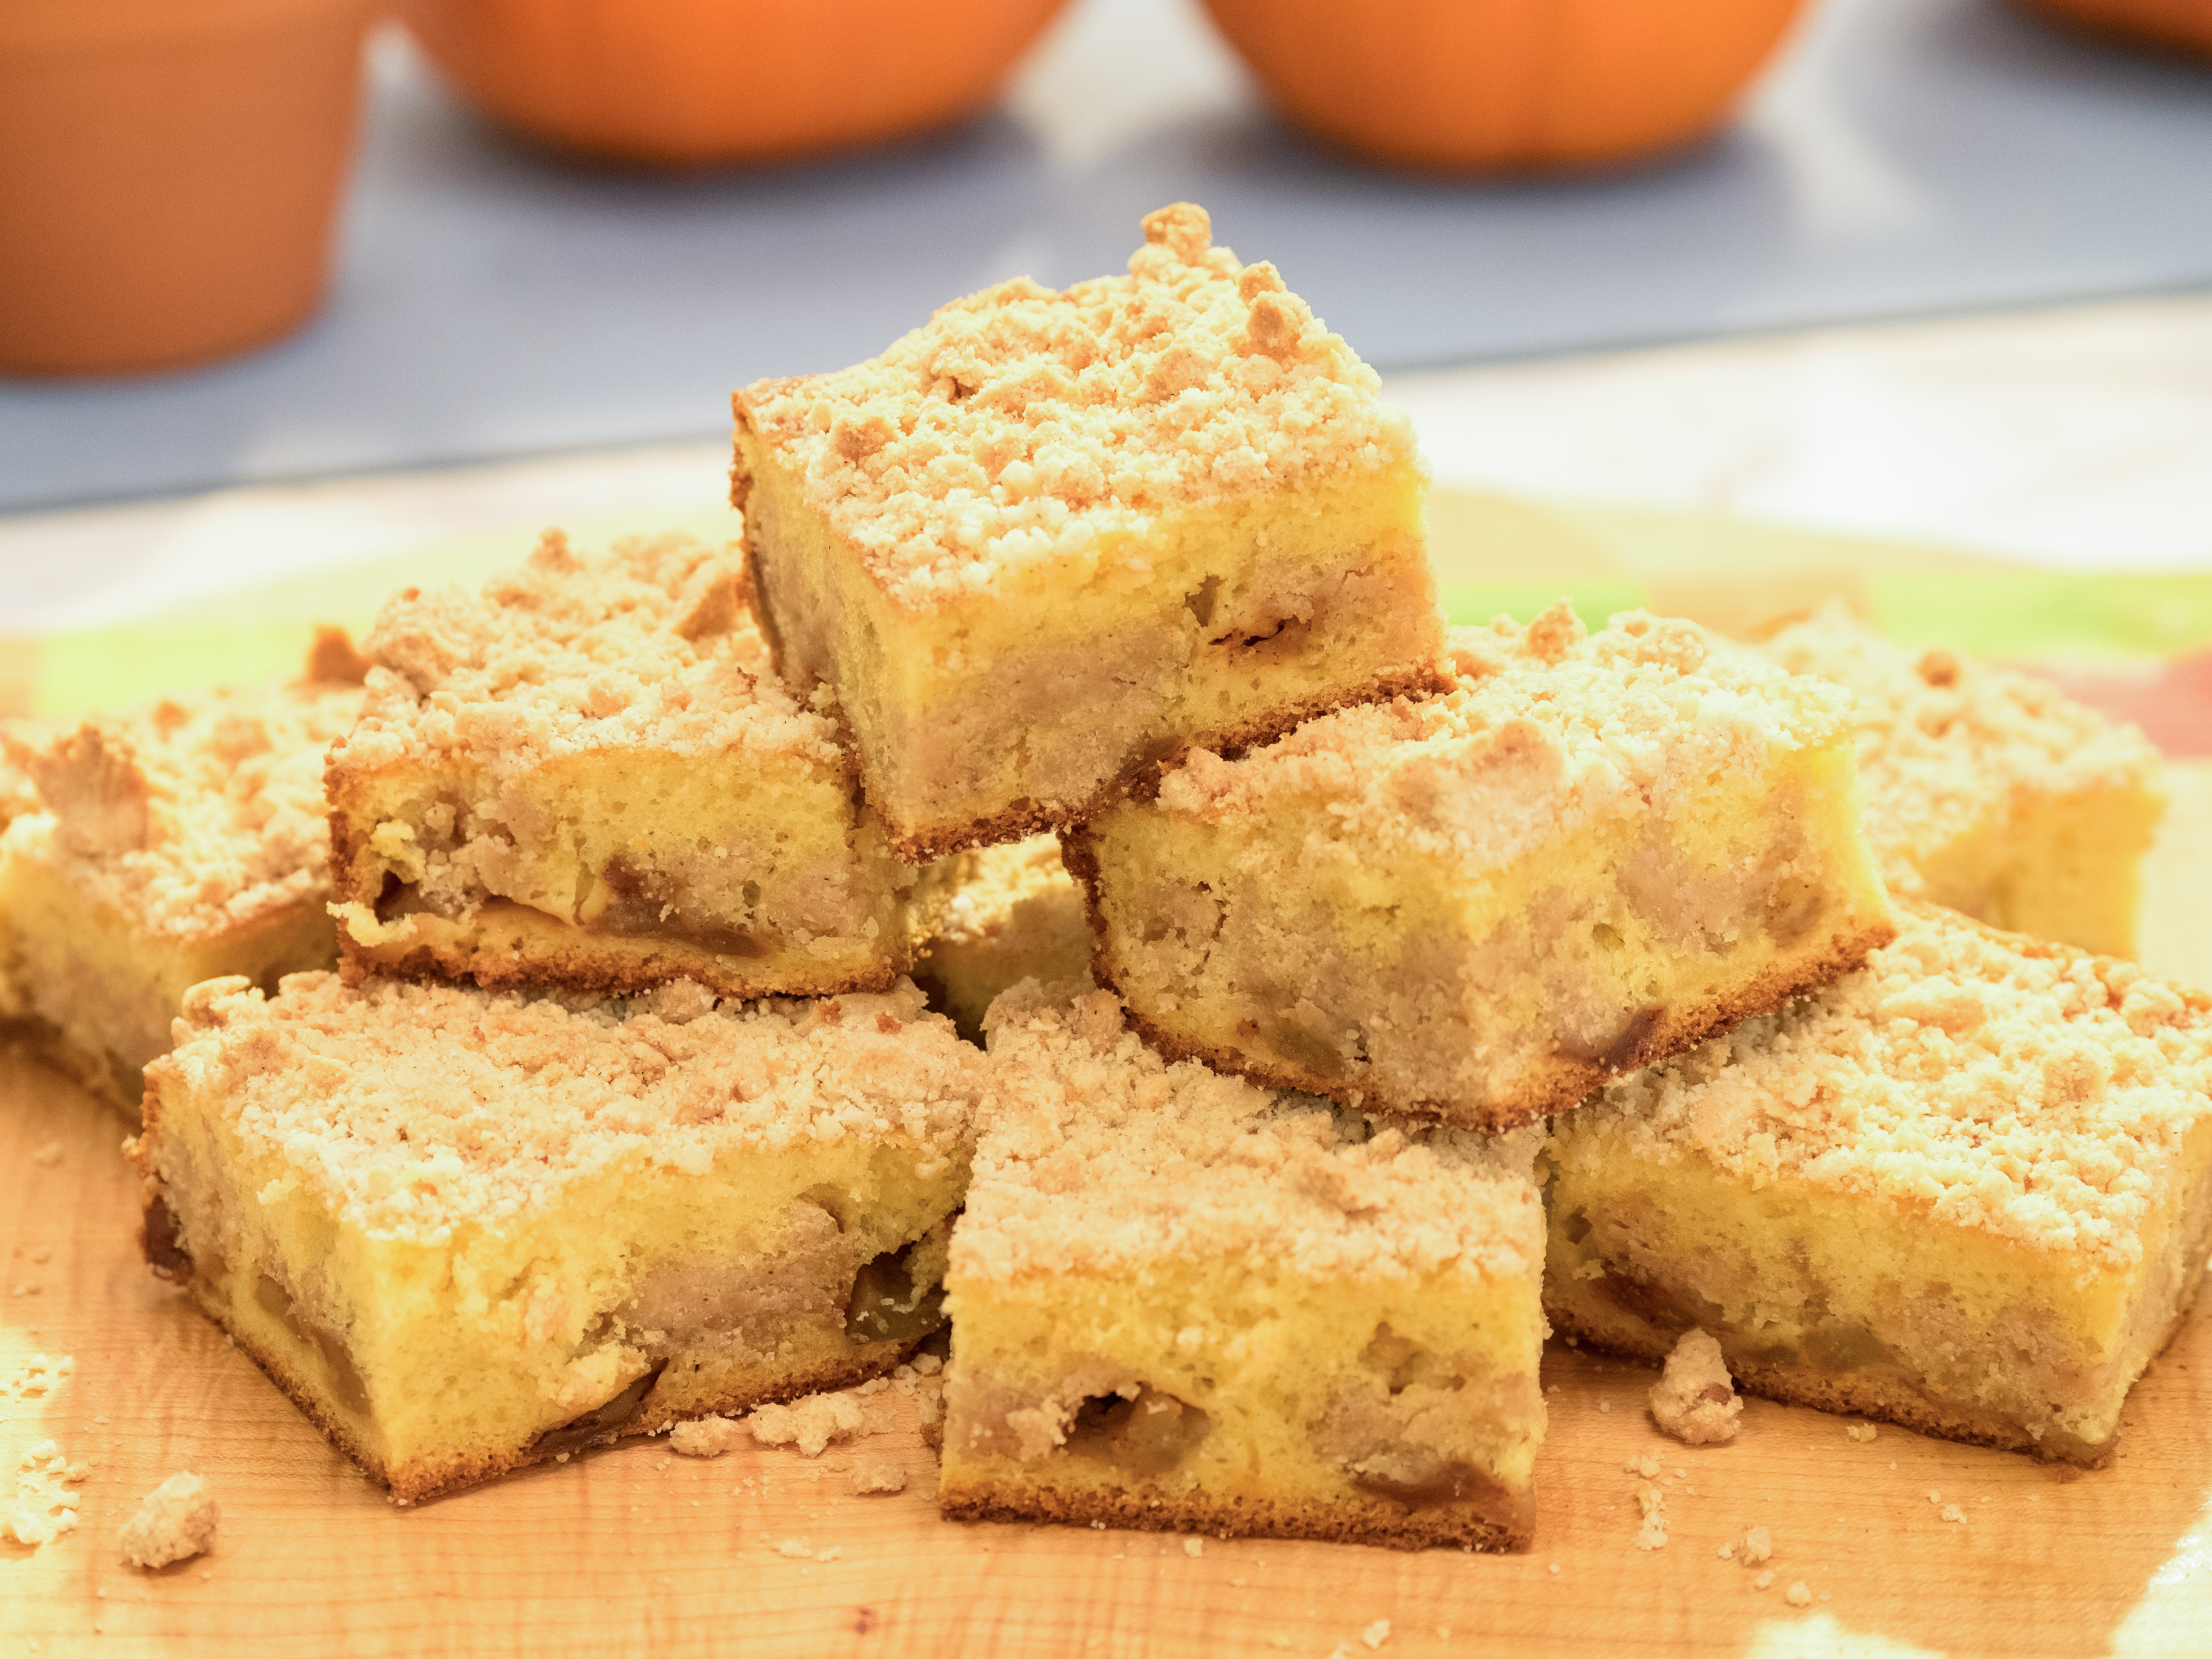 Apple Crumb Cake (Autumn Apple Coffee Cake Recipe) | NeighborFood